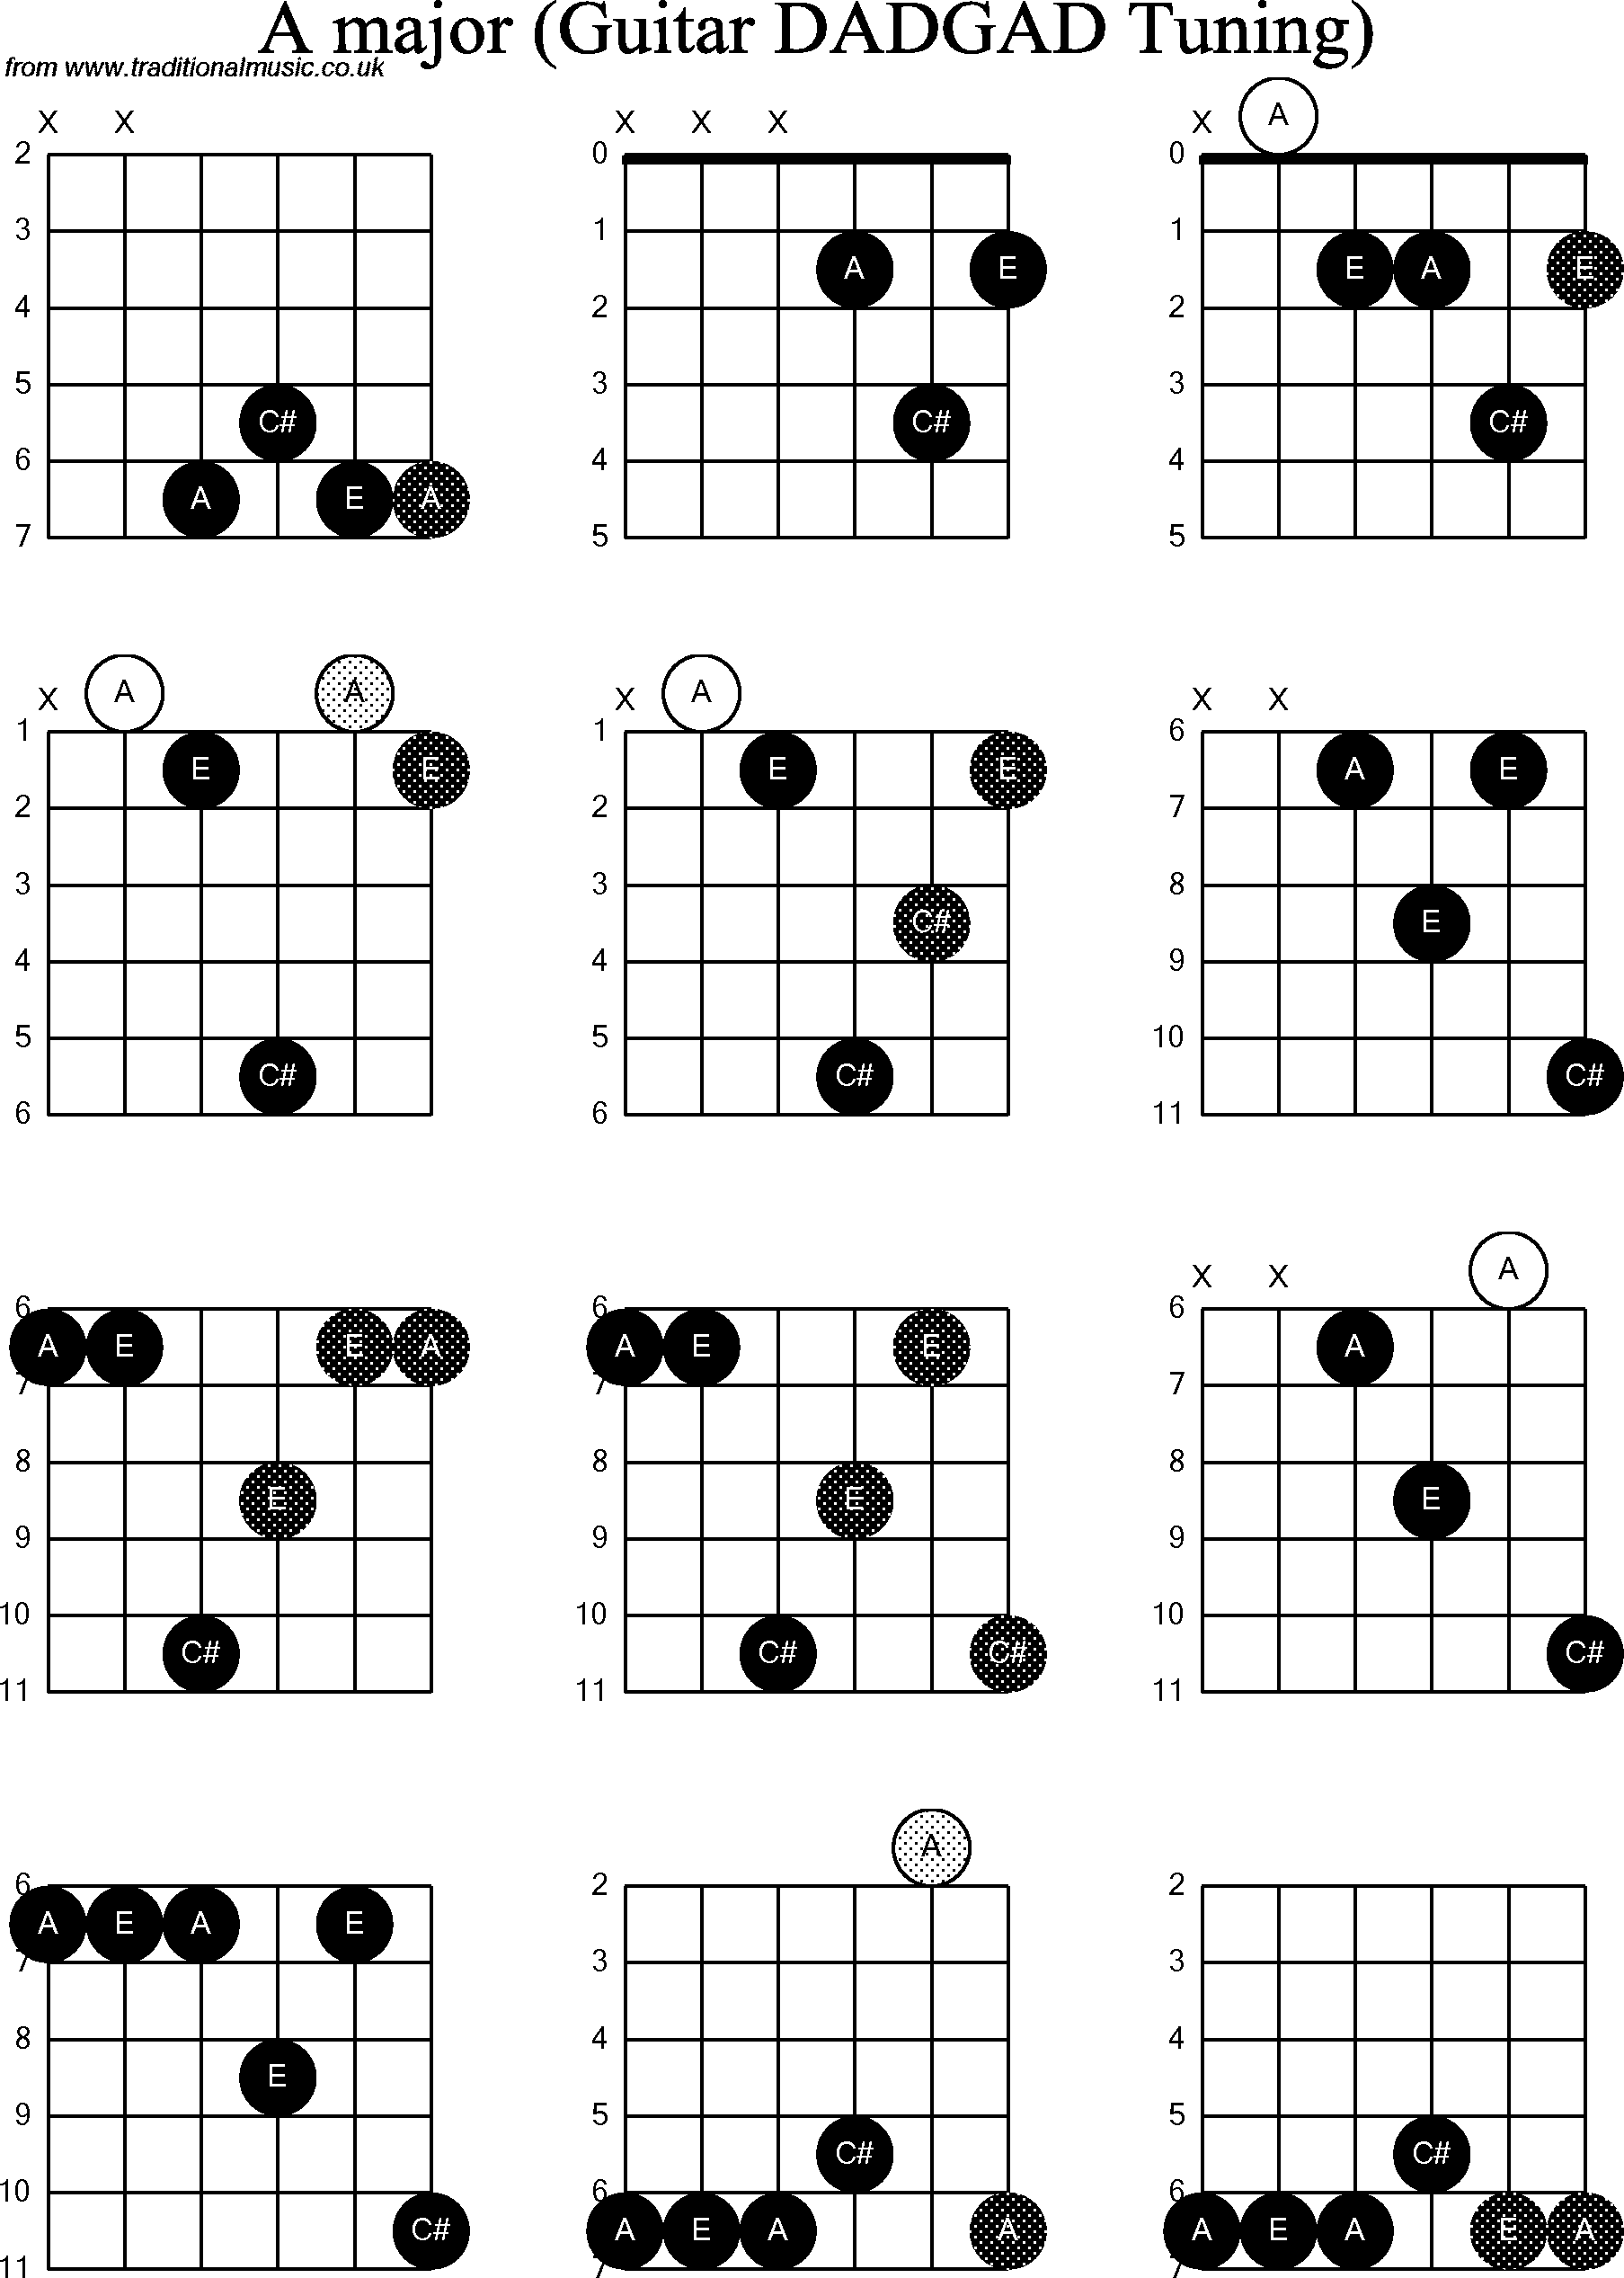 Chord Diagrams for D Modal Guitar(DADGAD), A